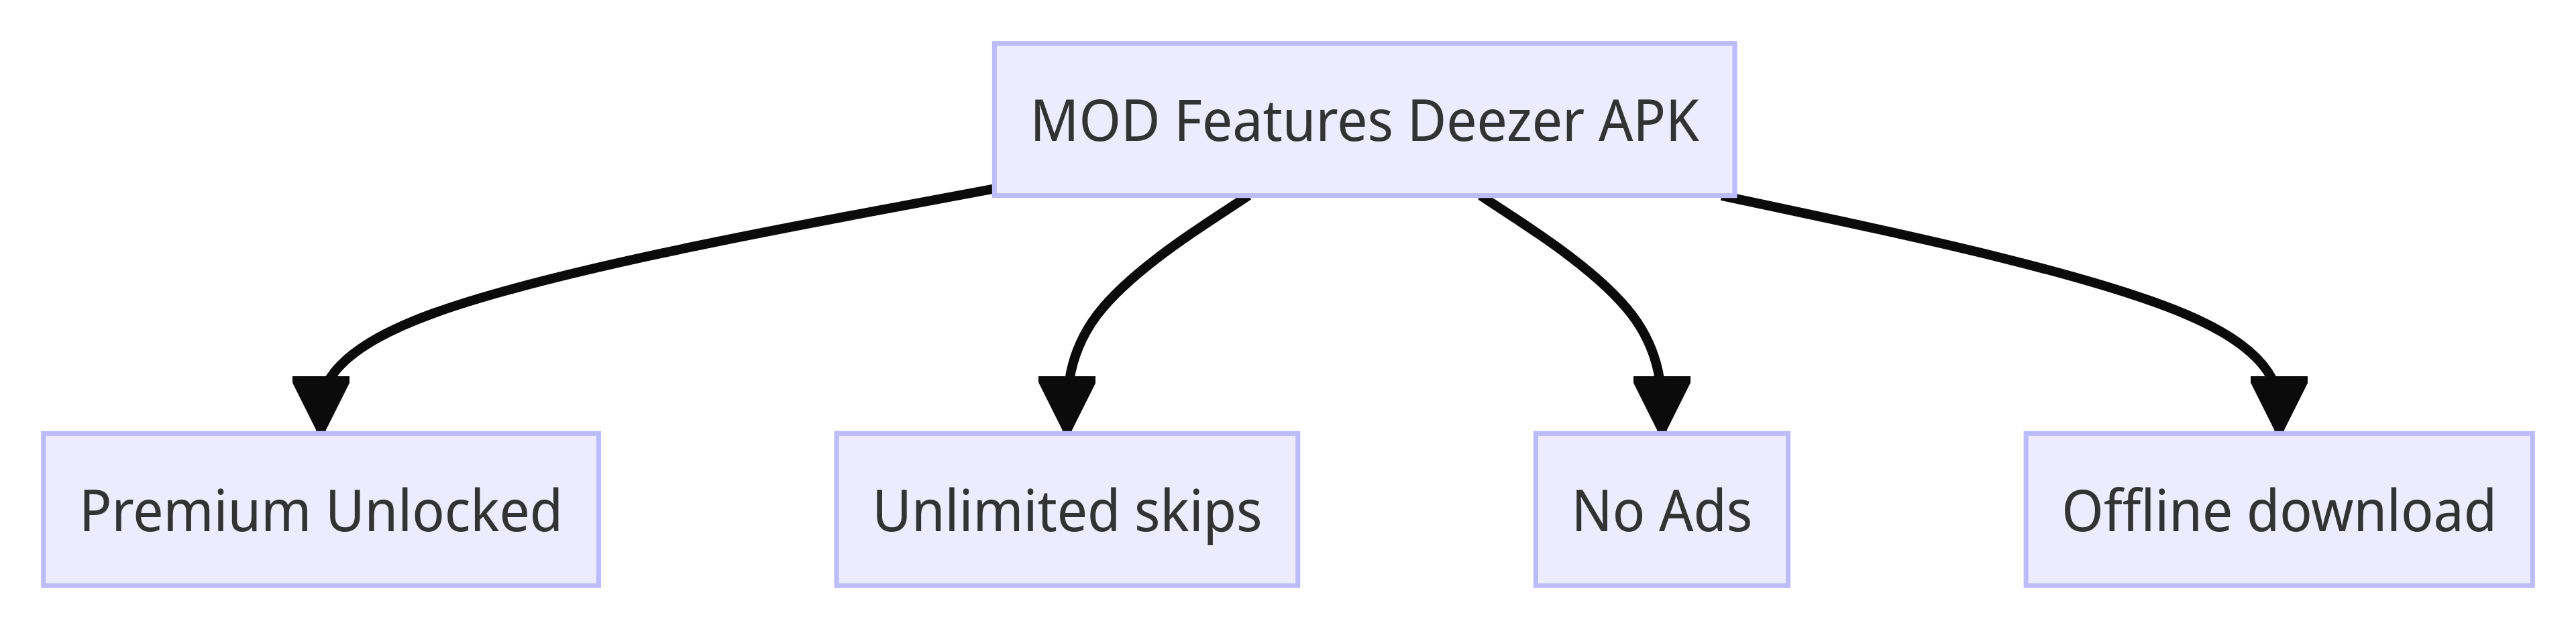 MOD Features Deezer APK